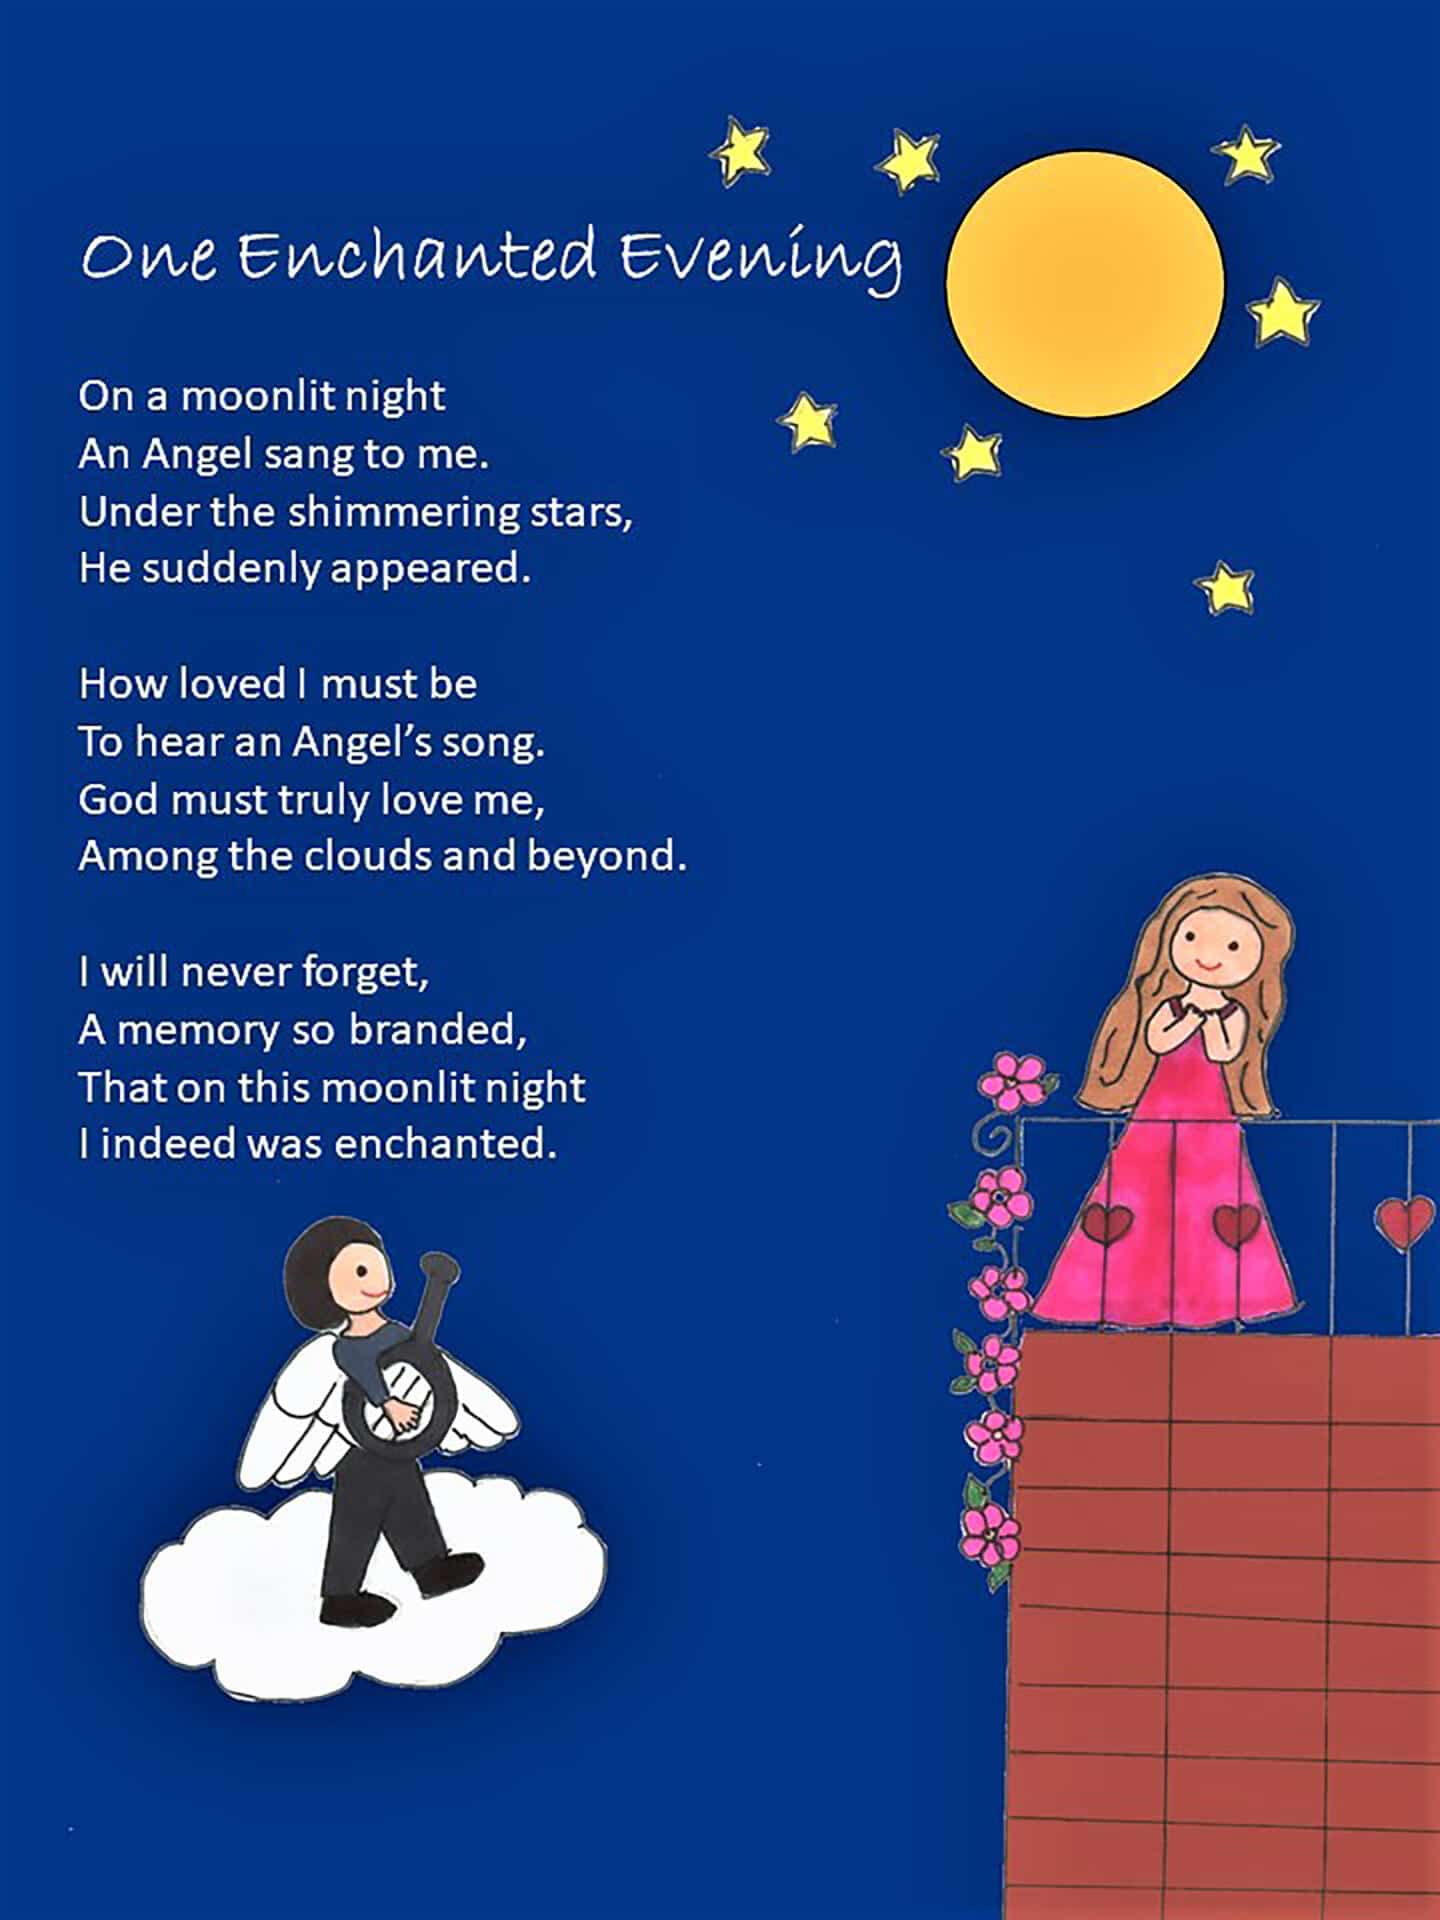 One Enchanted Evening eCard